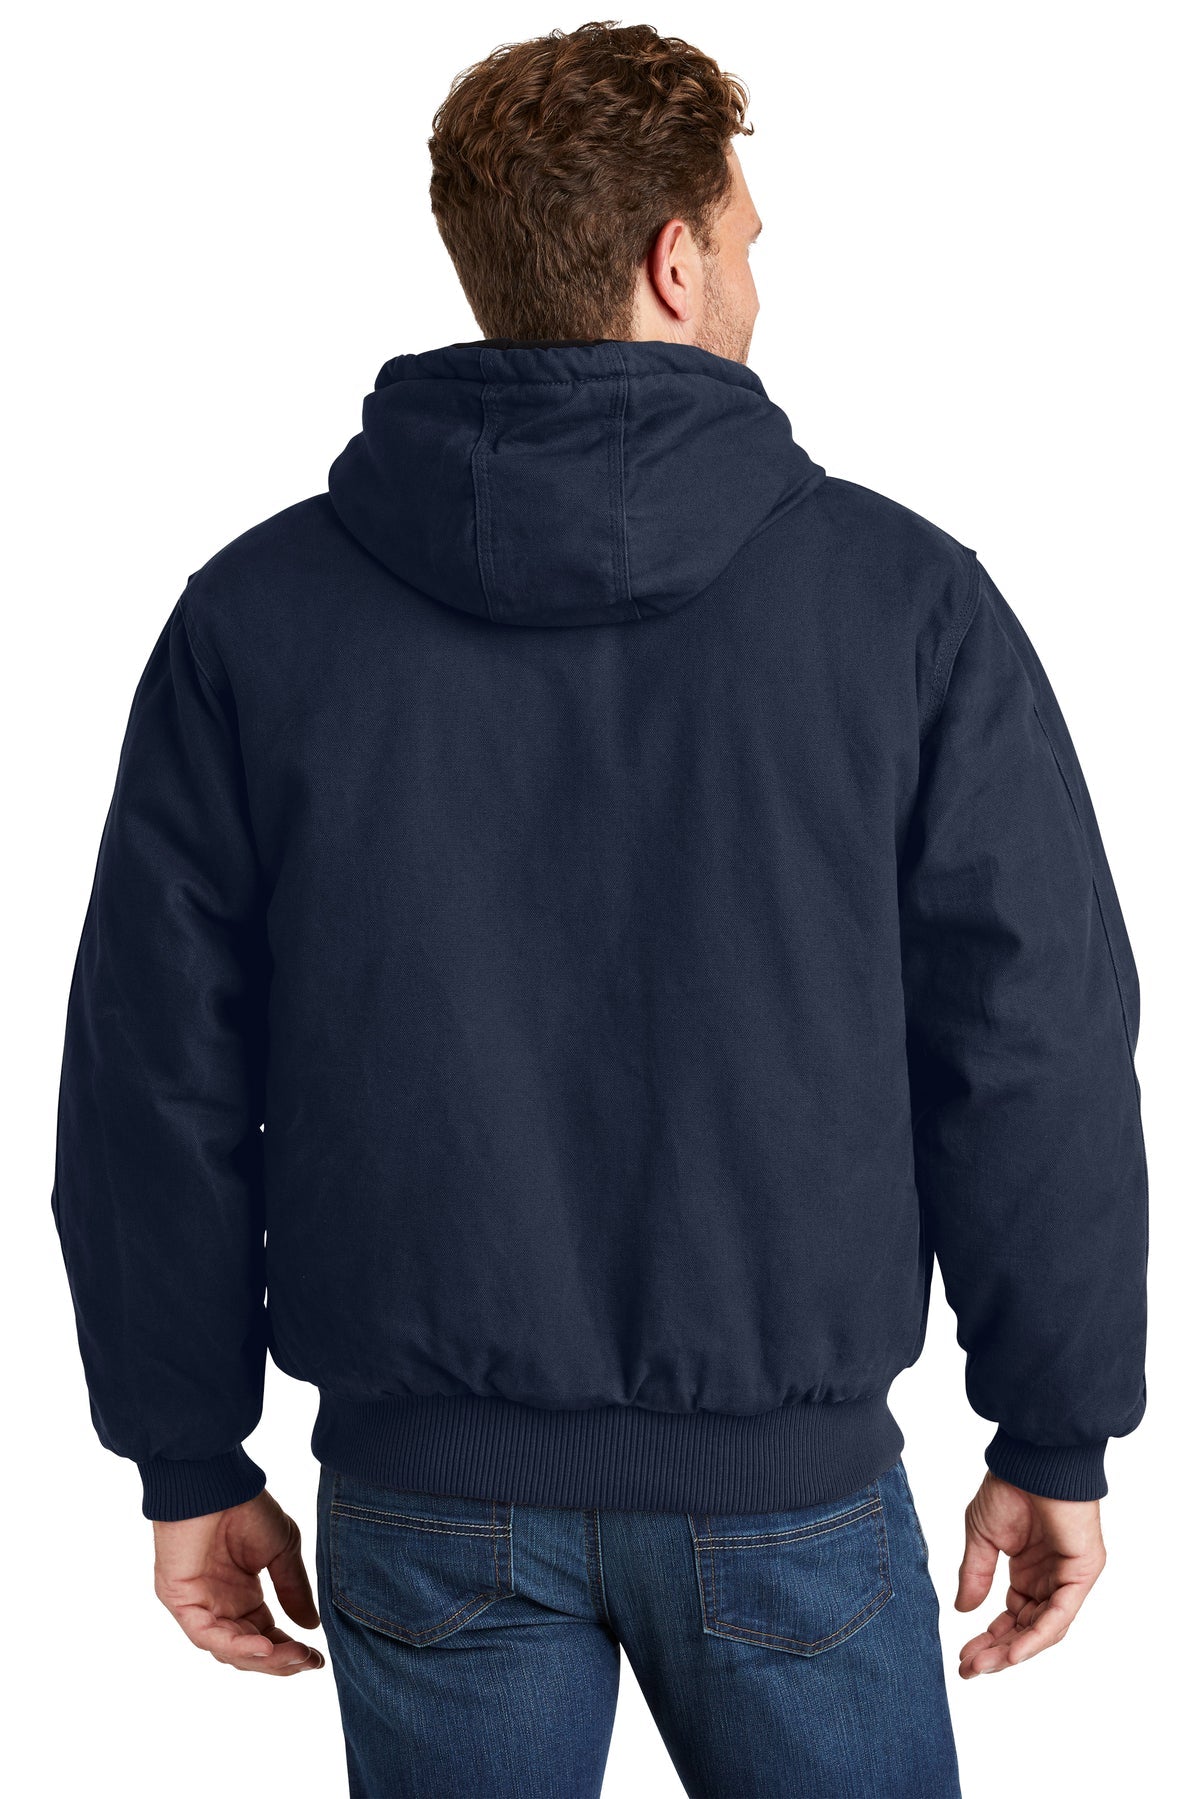 cornerstone_csj41 _navy_company_logo_jackets